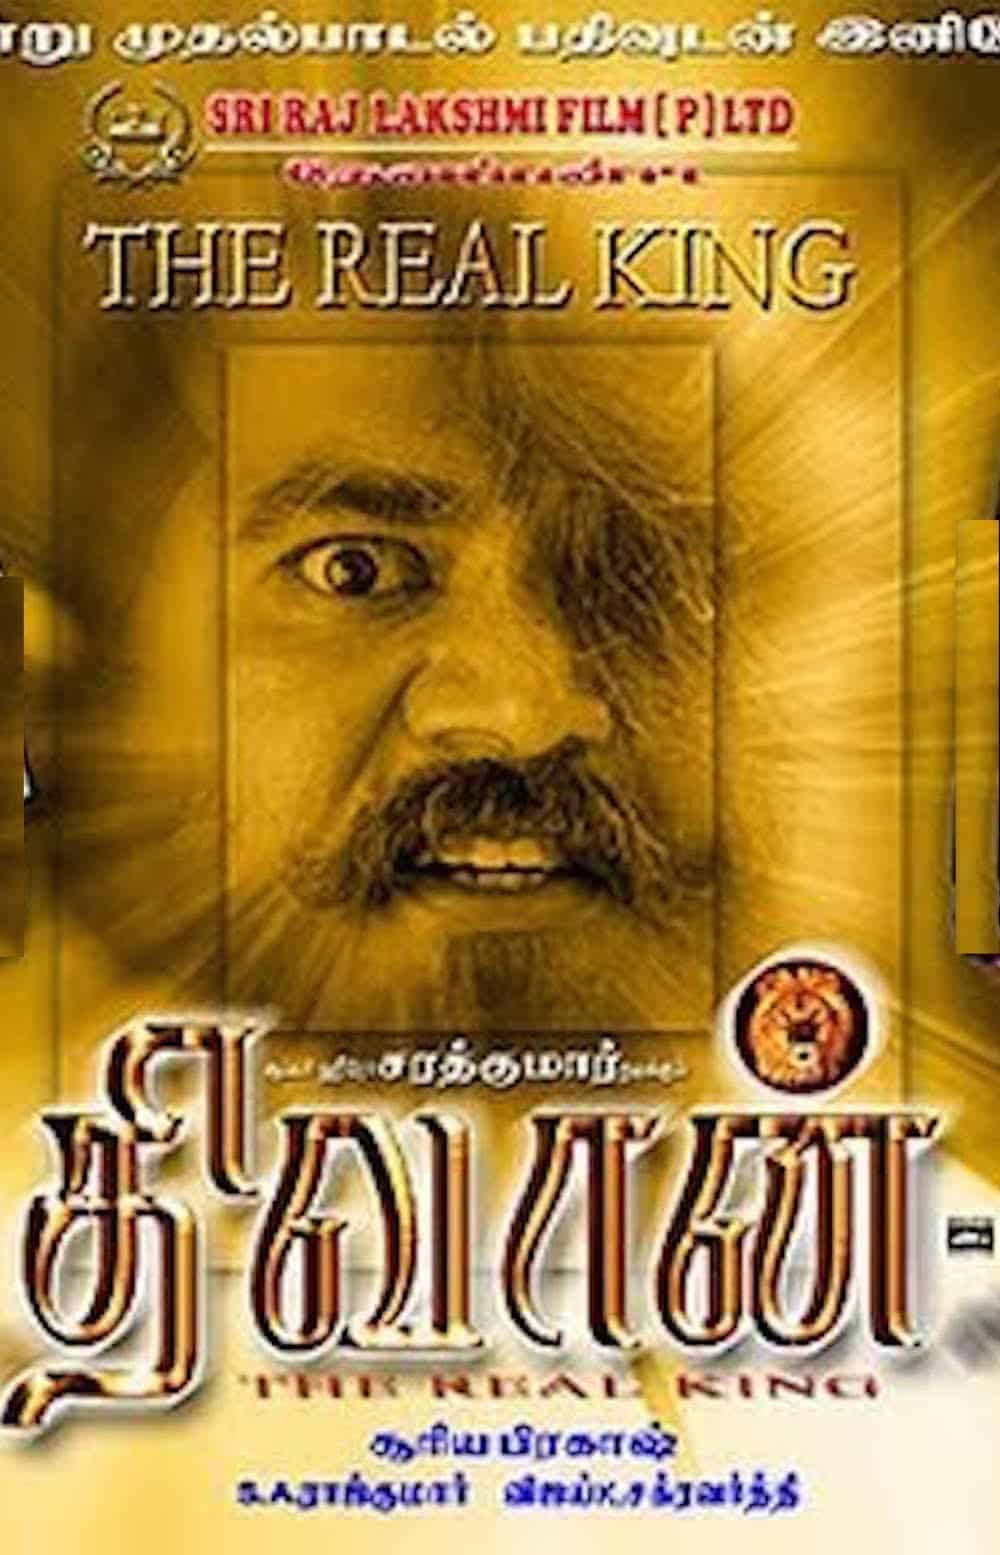 Diwan 2003 Tamil Action Movie Online